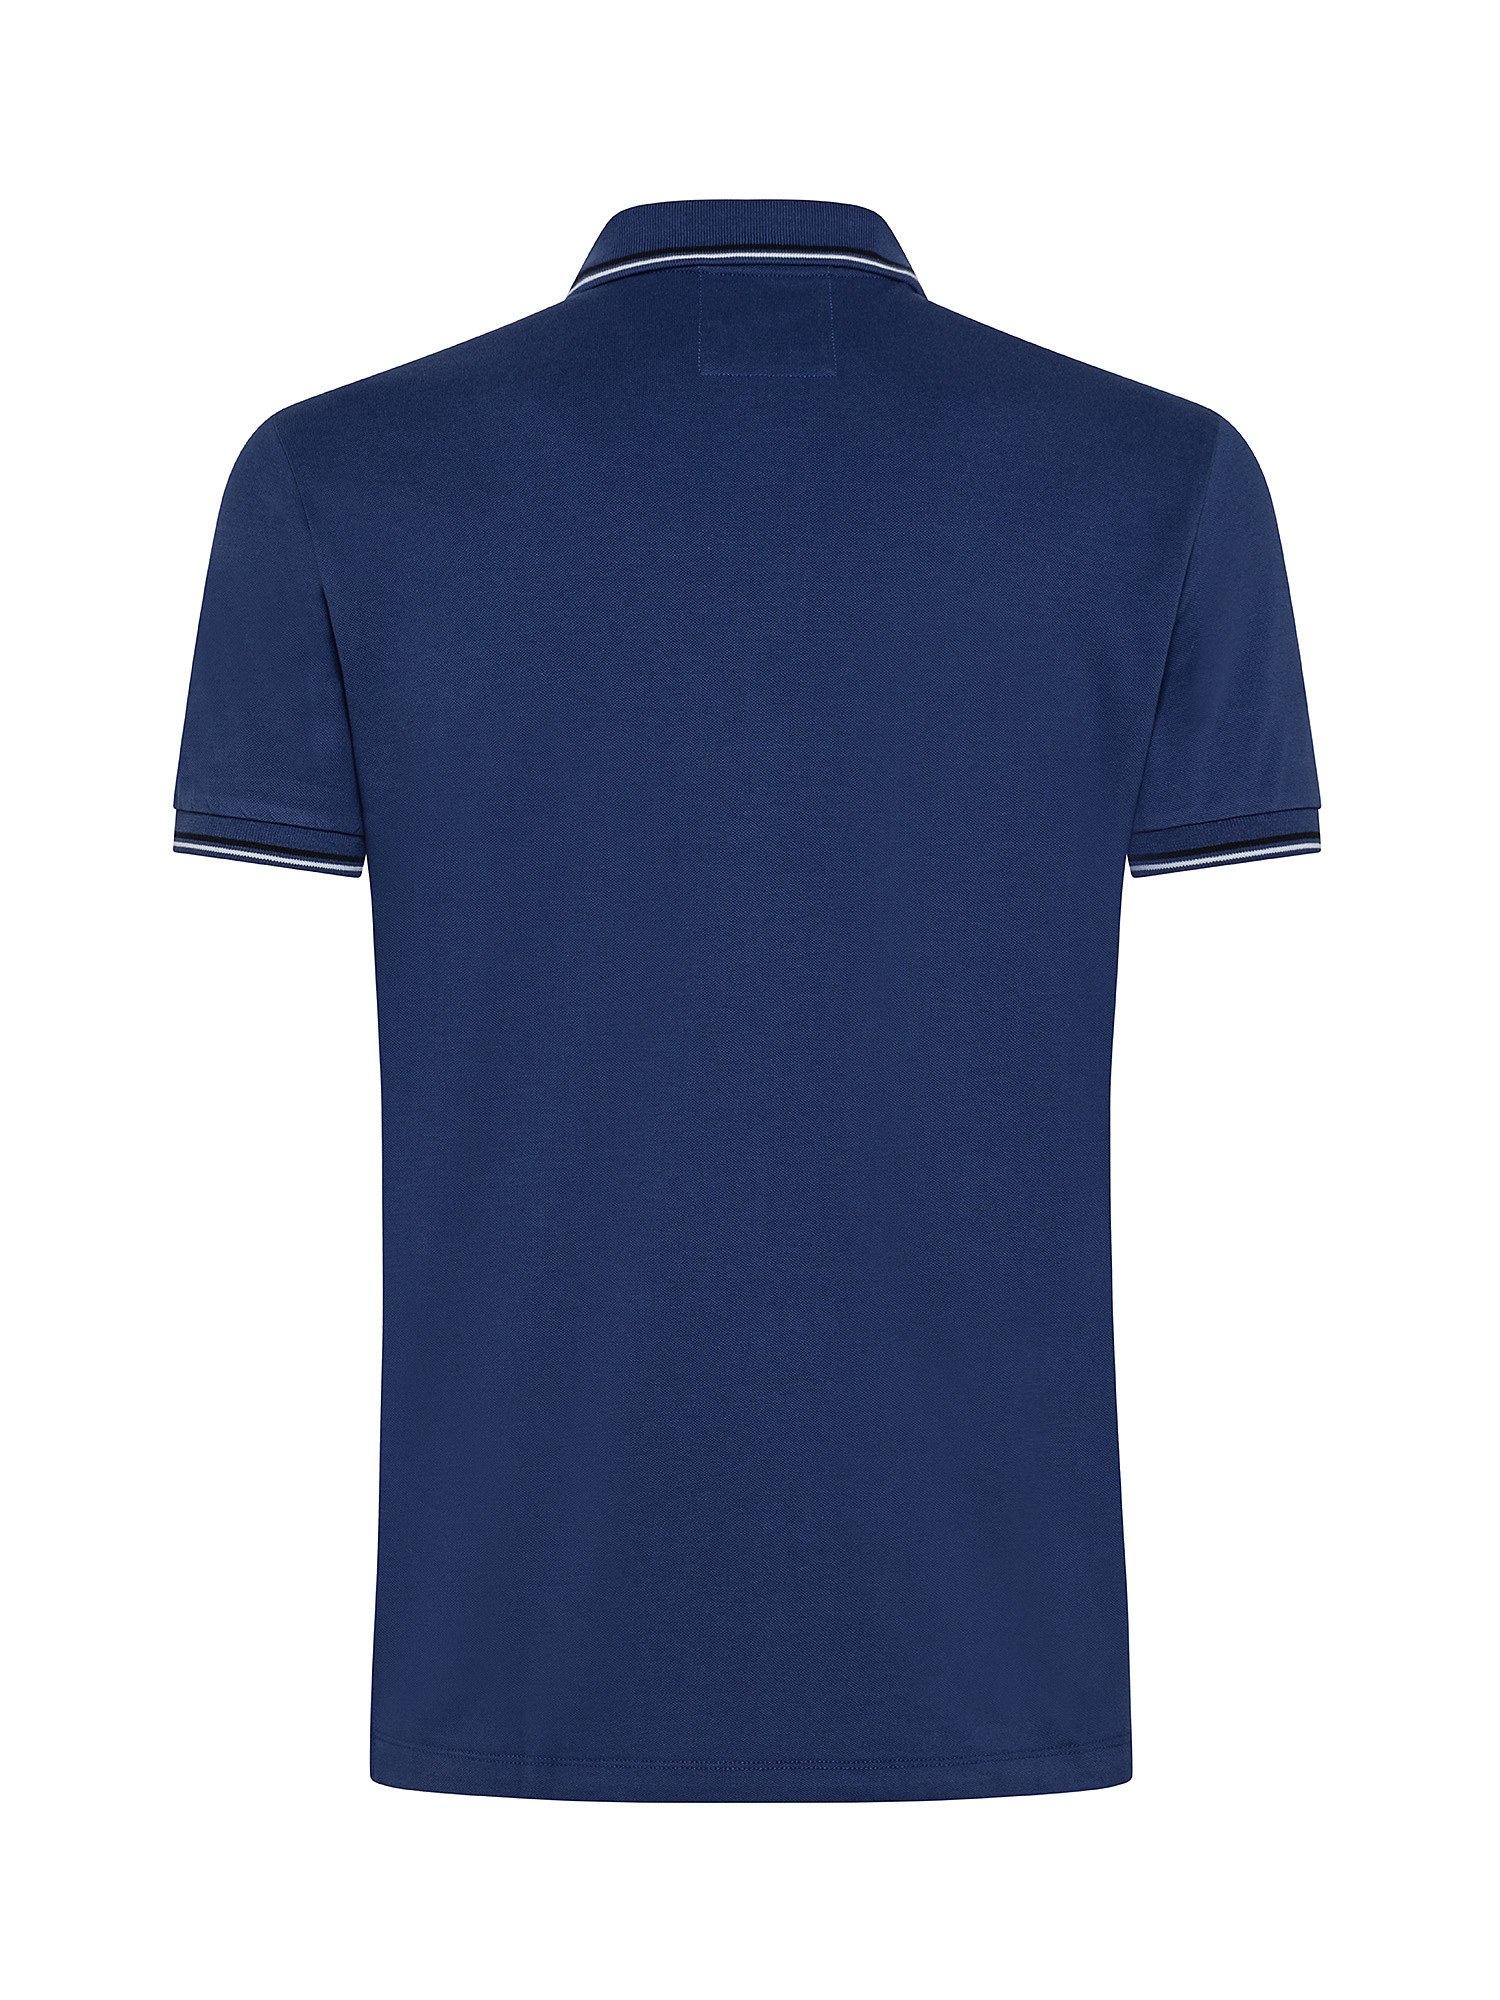 Piquet polo shirt, Blue, large image number 1